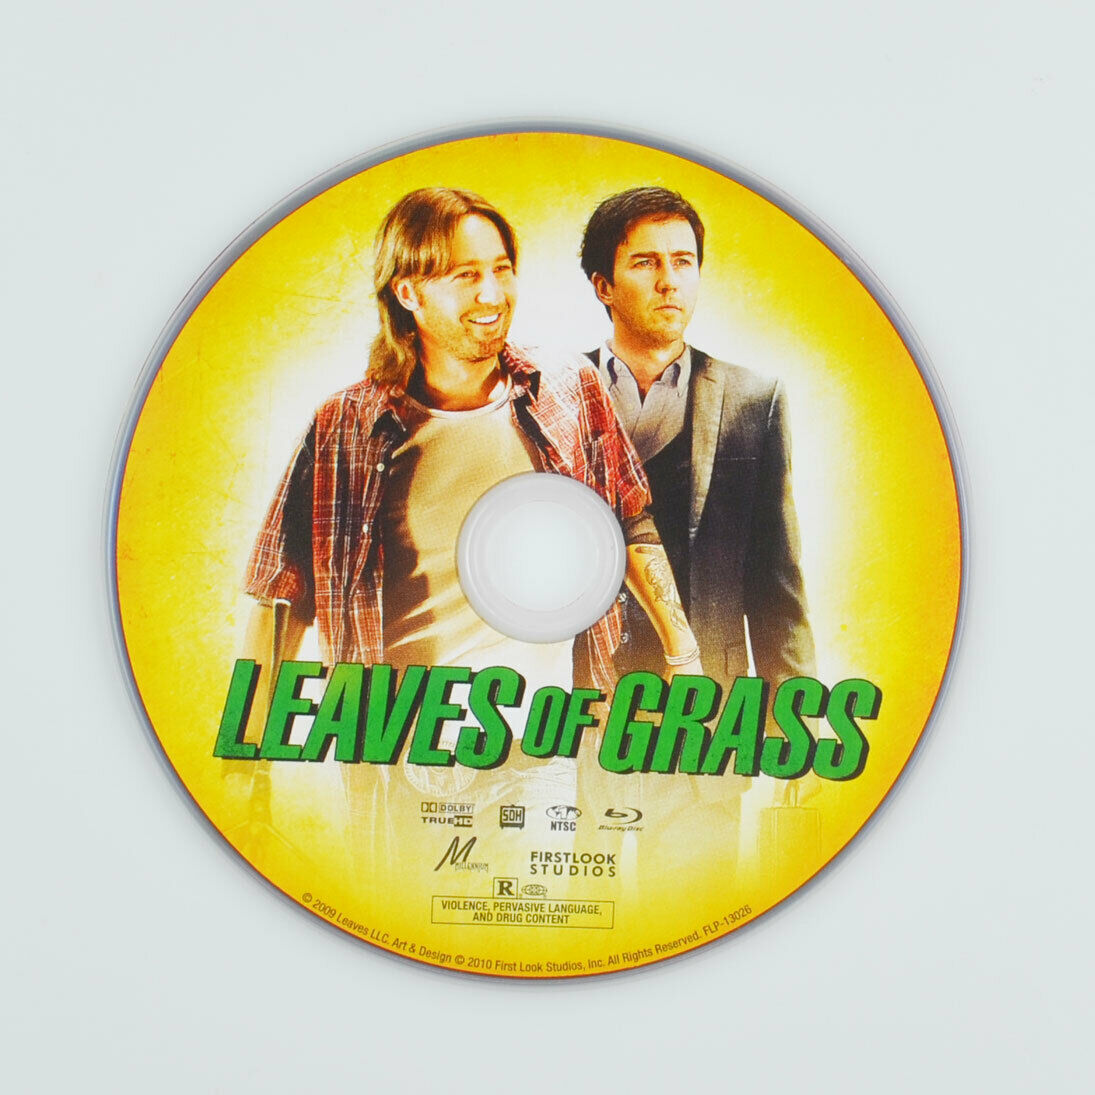 Leaves of Grass (Blu-ray Disc, 2010) Edward Norton, Susan Sarandon - DISC ONLY